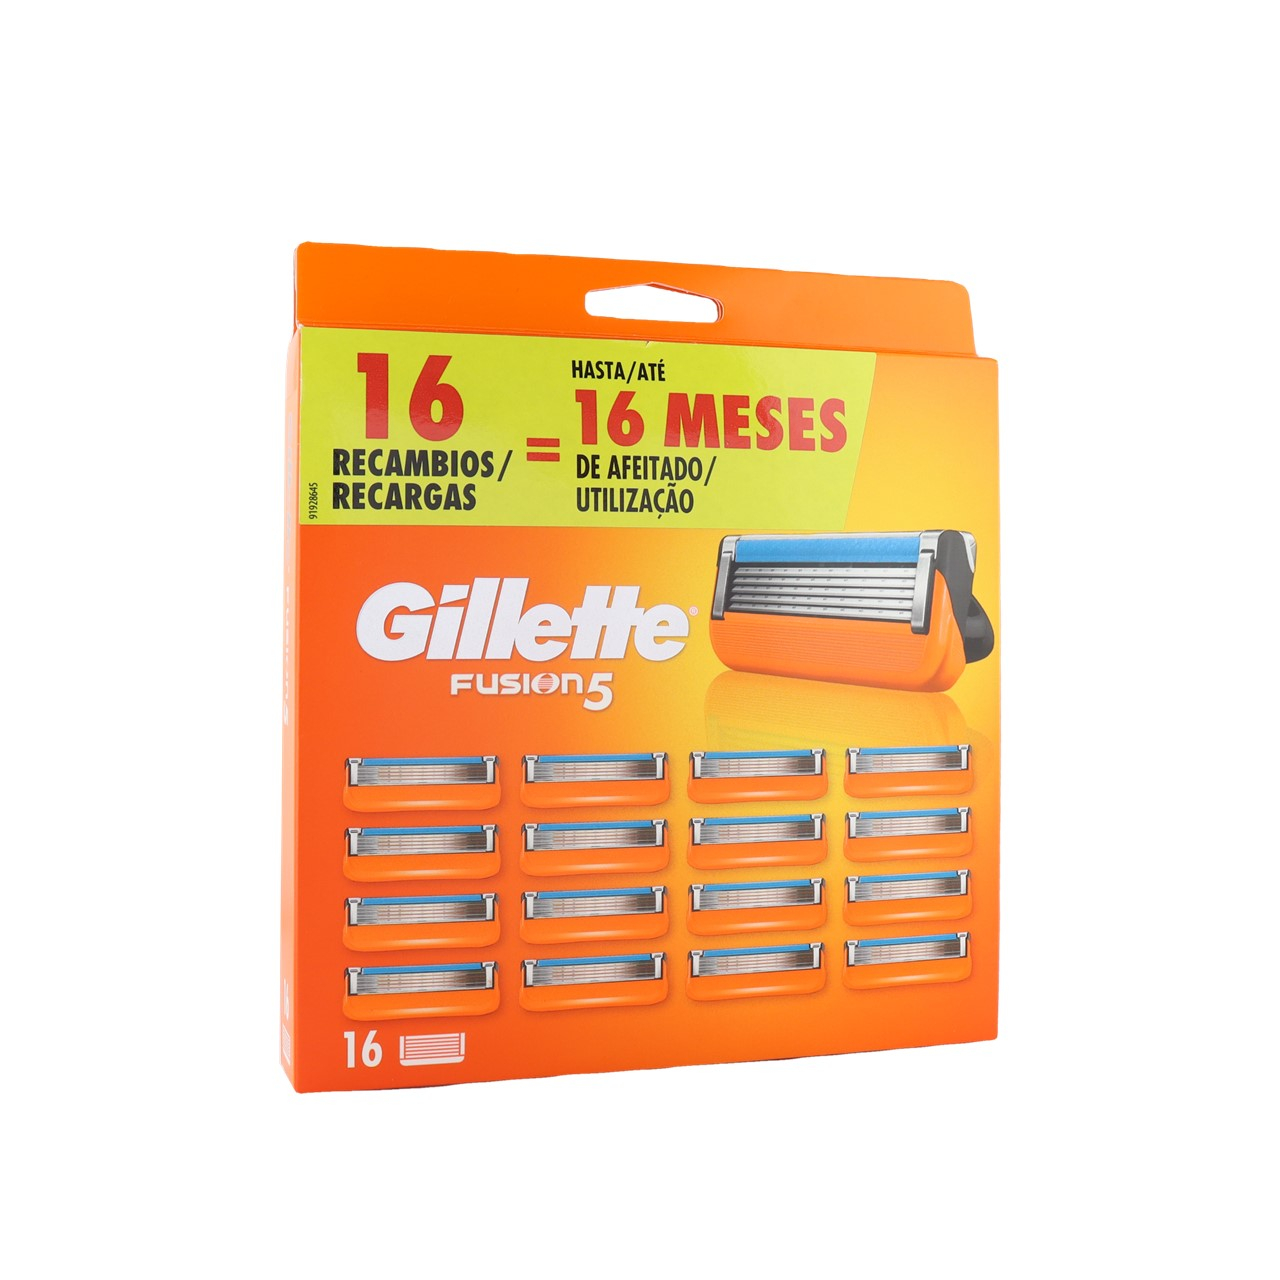 Gillette Fusion5 Replacement Razor Blades x16